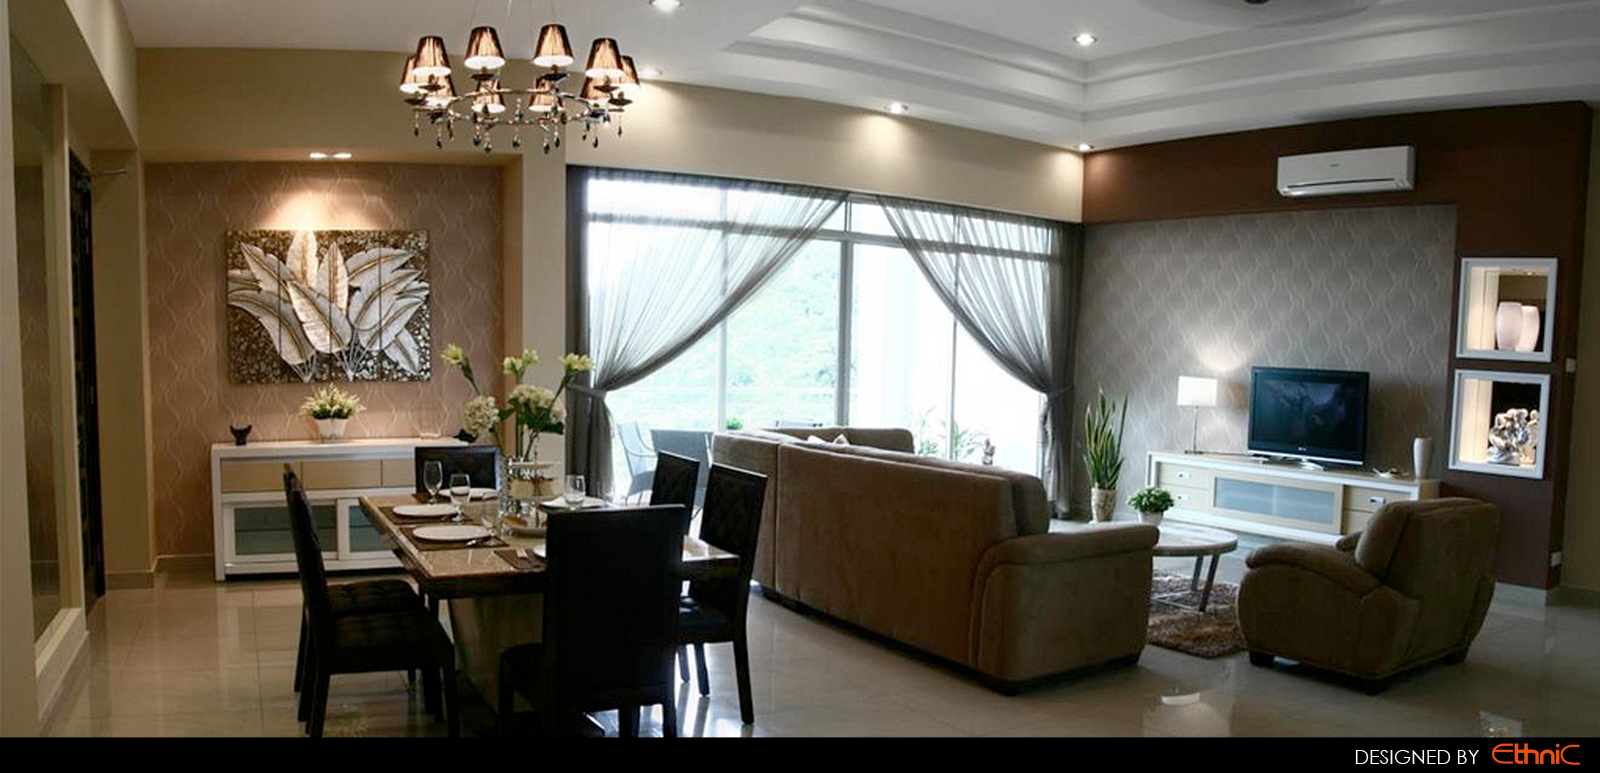 Ethnic Penang Interior Design And Furniture NICK CHAN DOT NET